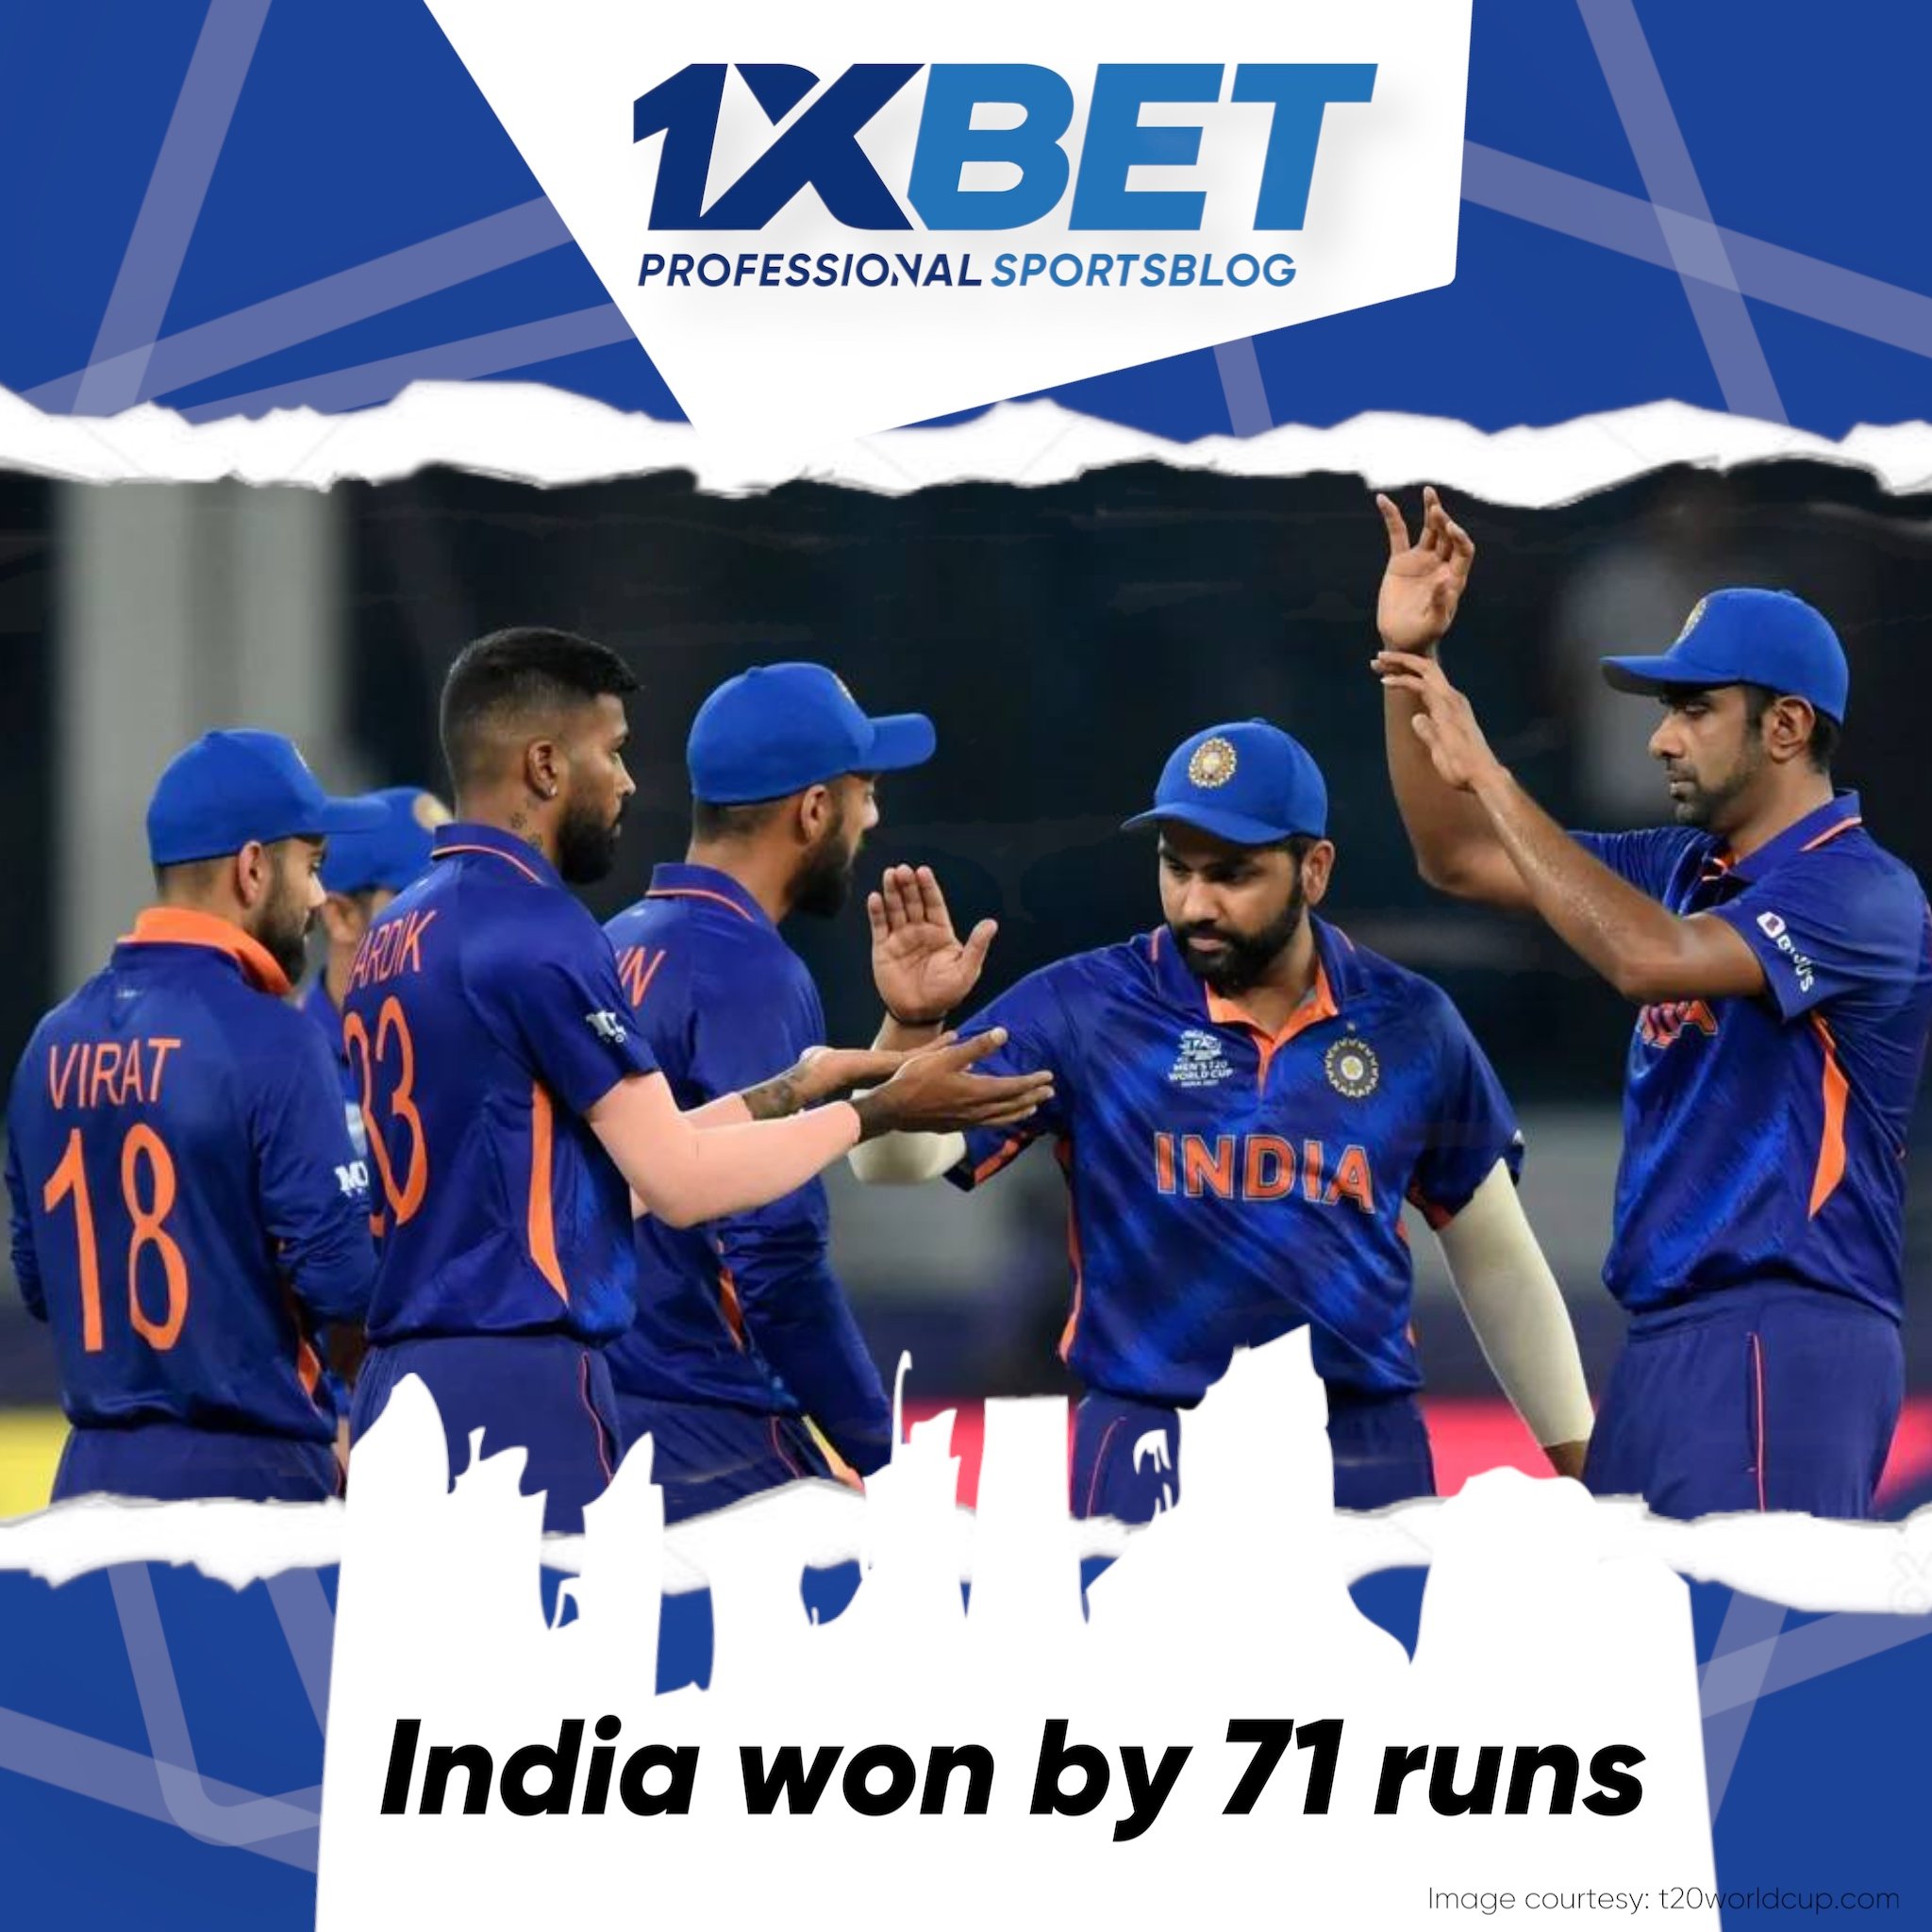 India won by 71 runs